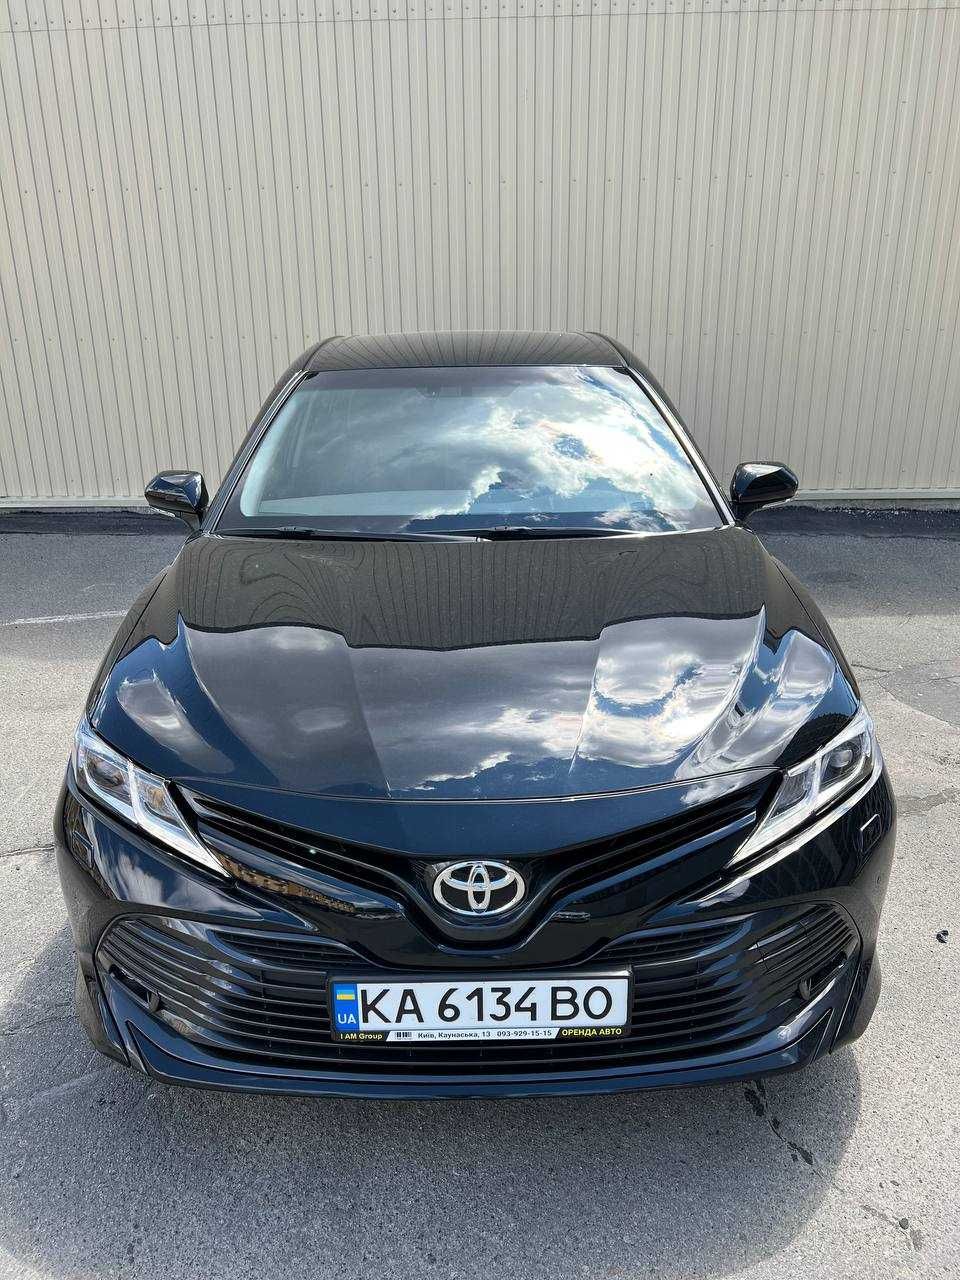 Оренда автомобіля прокат авто Київ Toyota Camry 2020